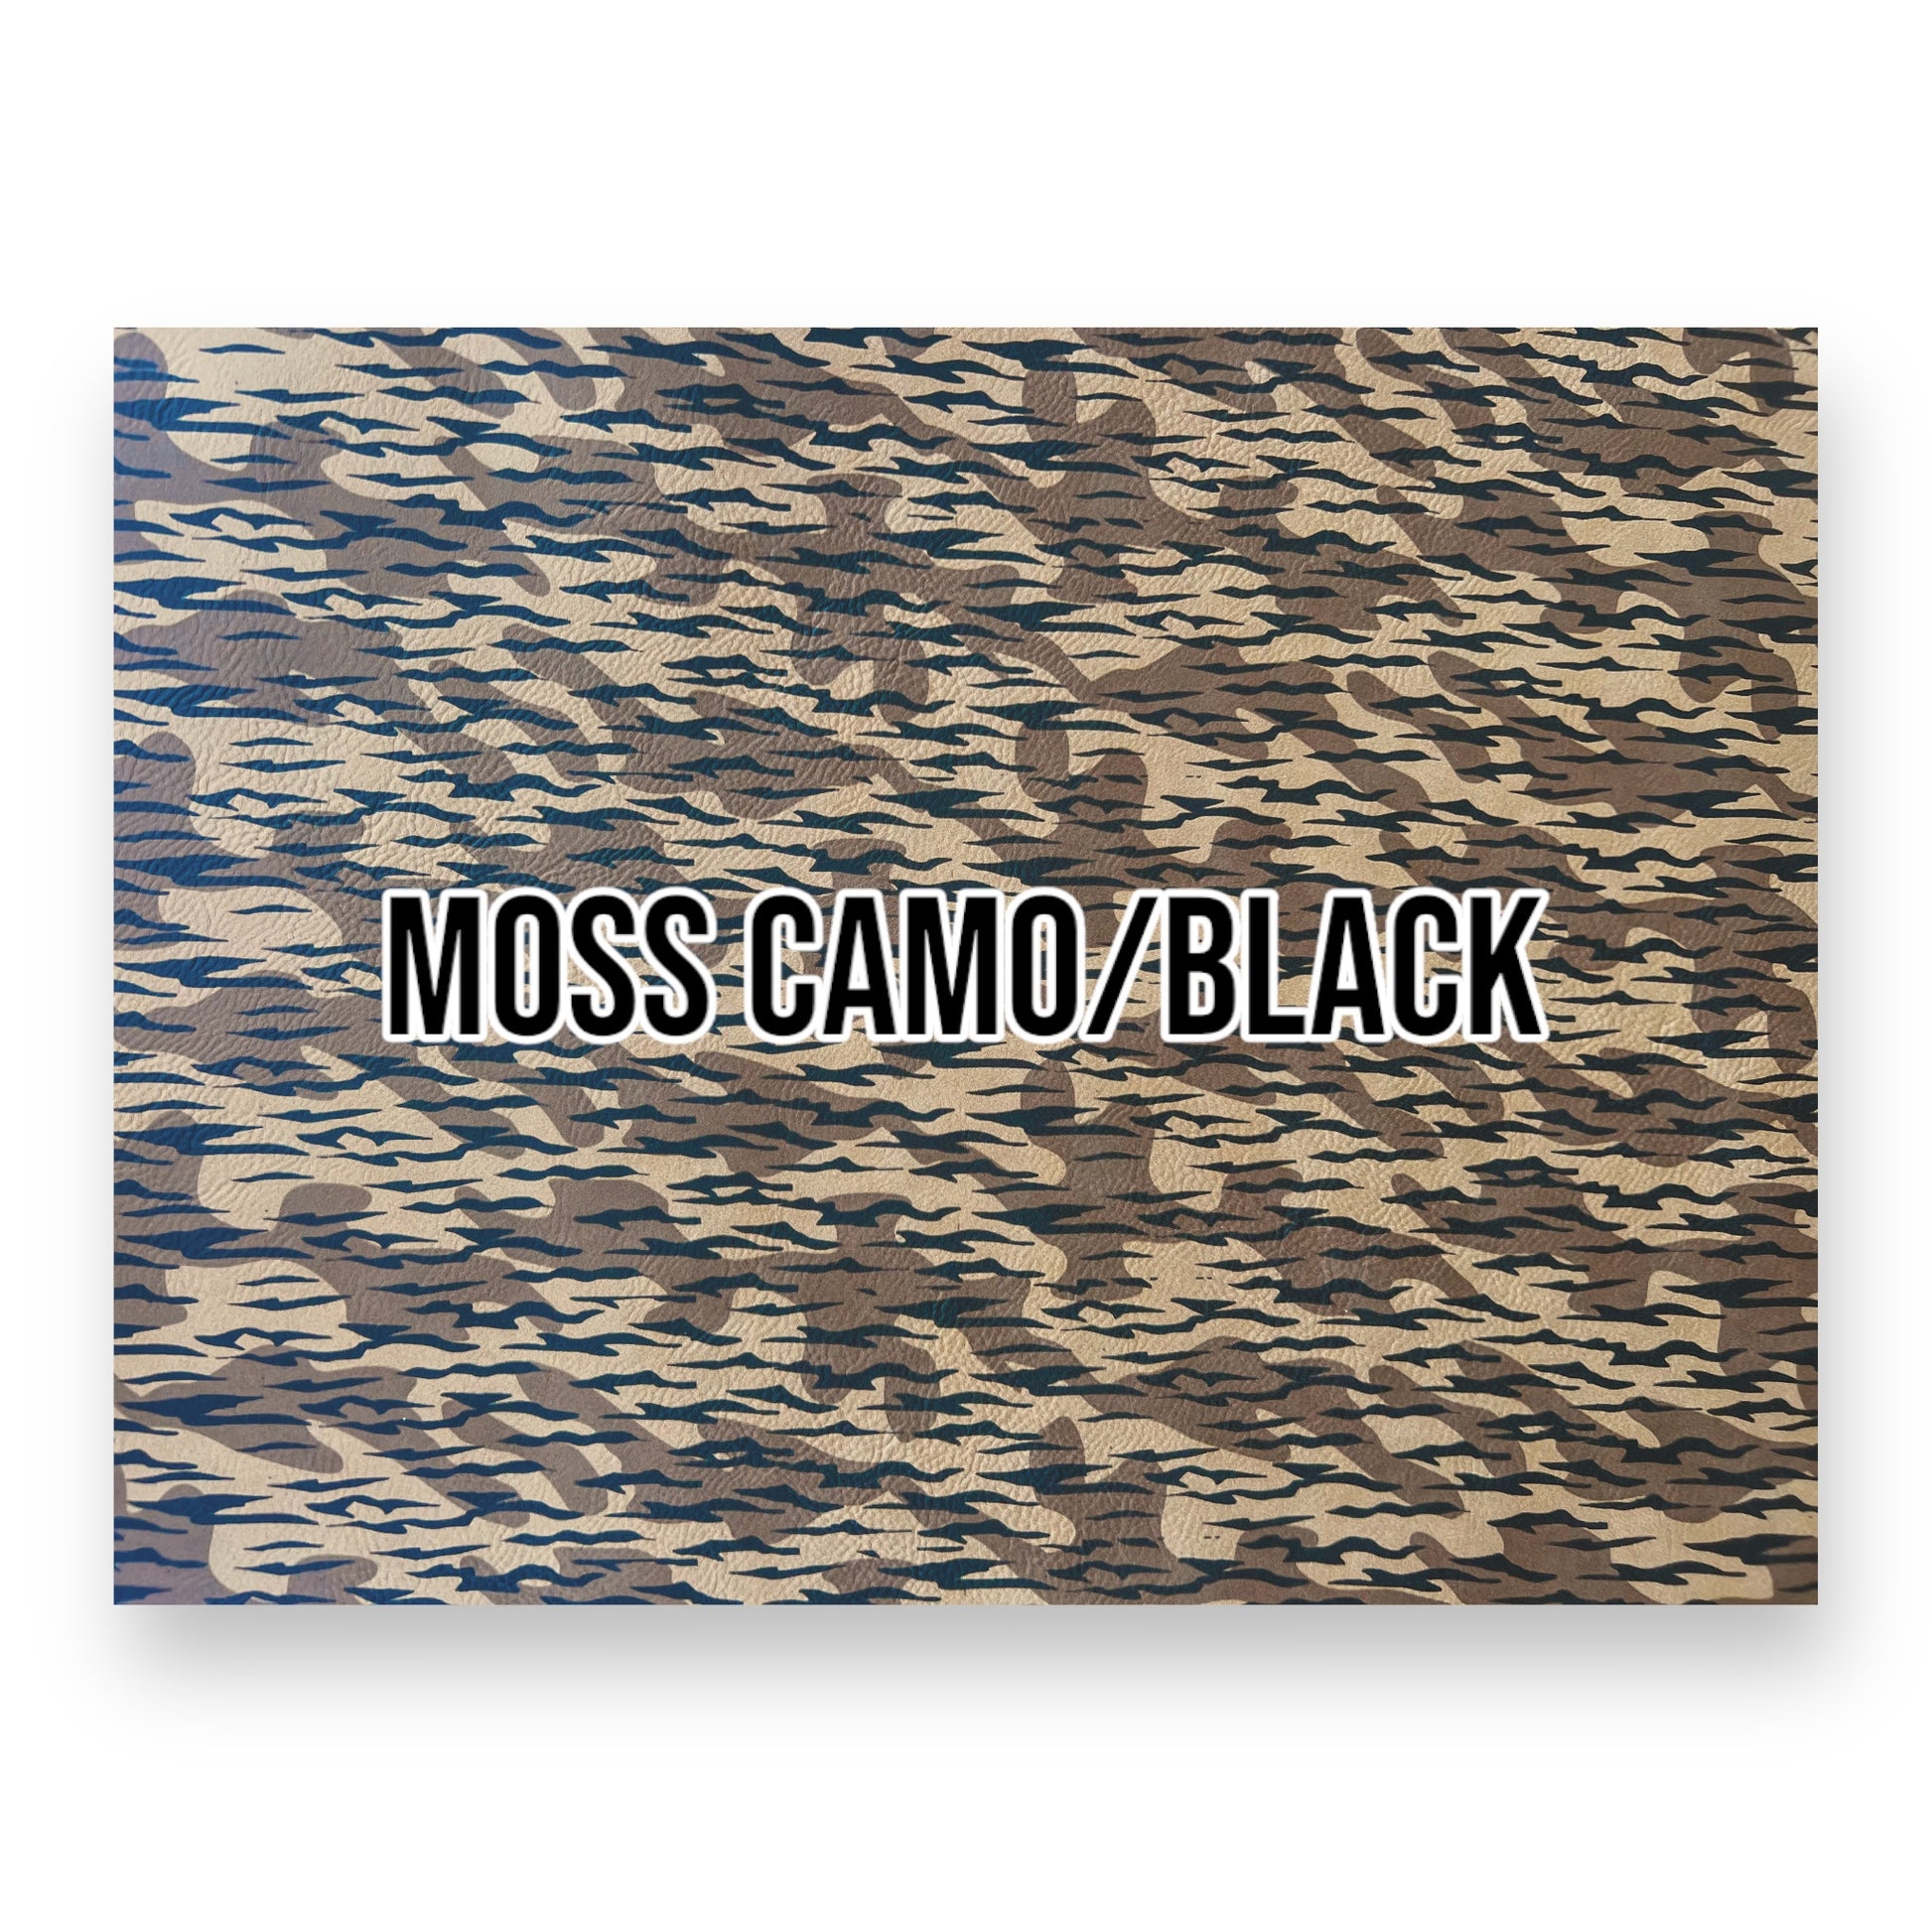 MOSS CAMO/BLACK HYDBOND LEATHERETTE SHEET (12x24)